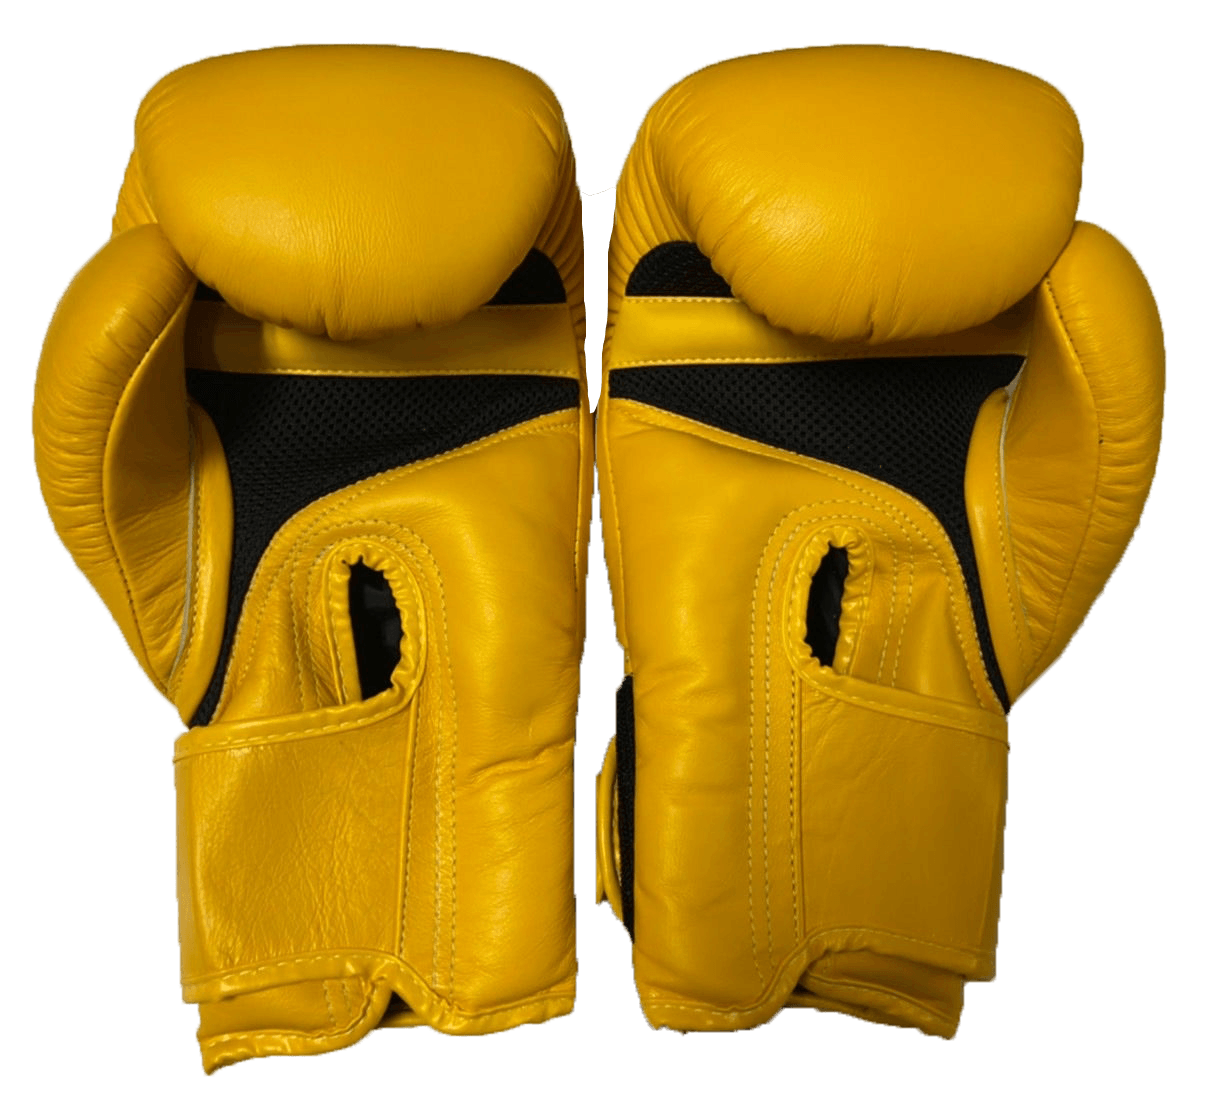 Top King Boxing Gloves "Super" AIR TKBGSA Yellow Top King